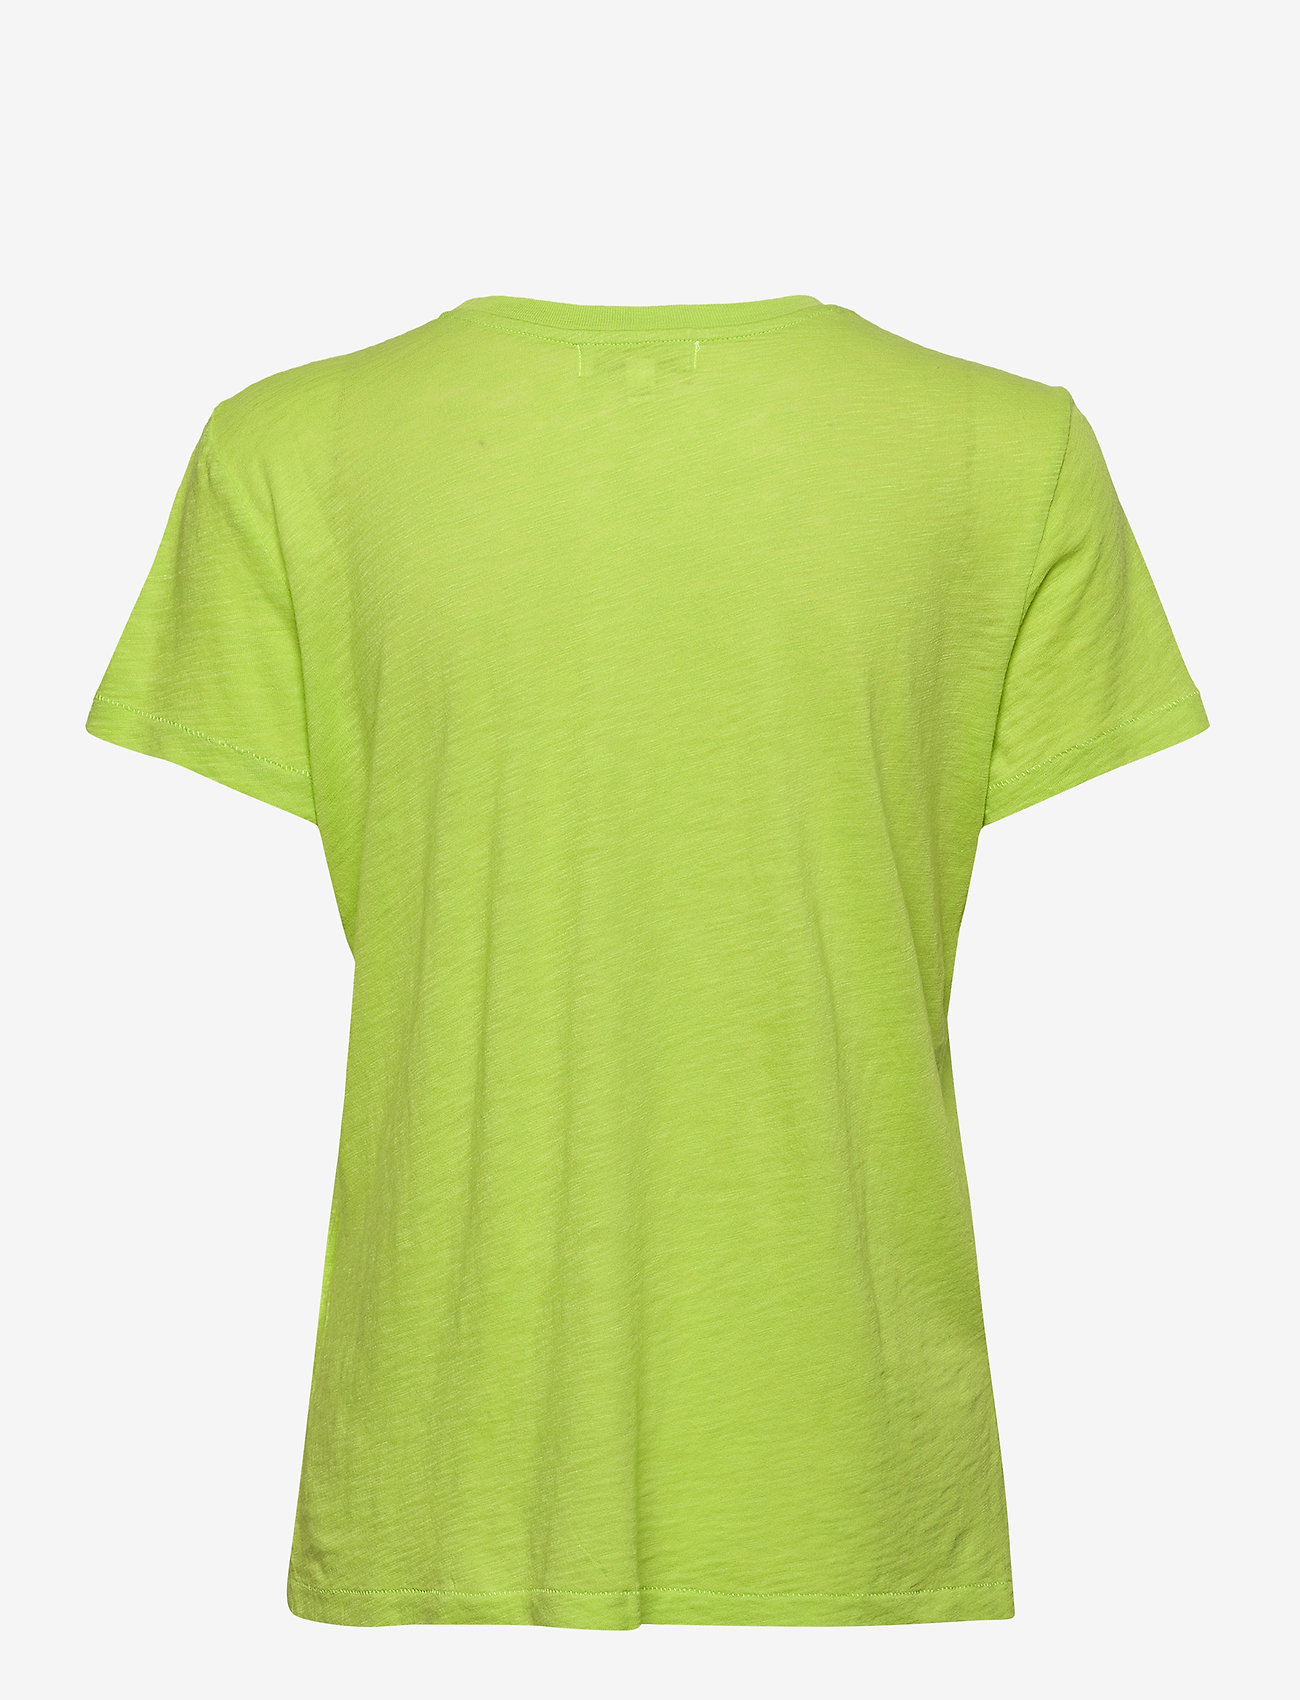 PJ Salvage - s/s shirt - Överdelar - lime green - 1